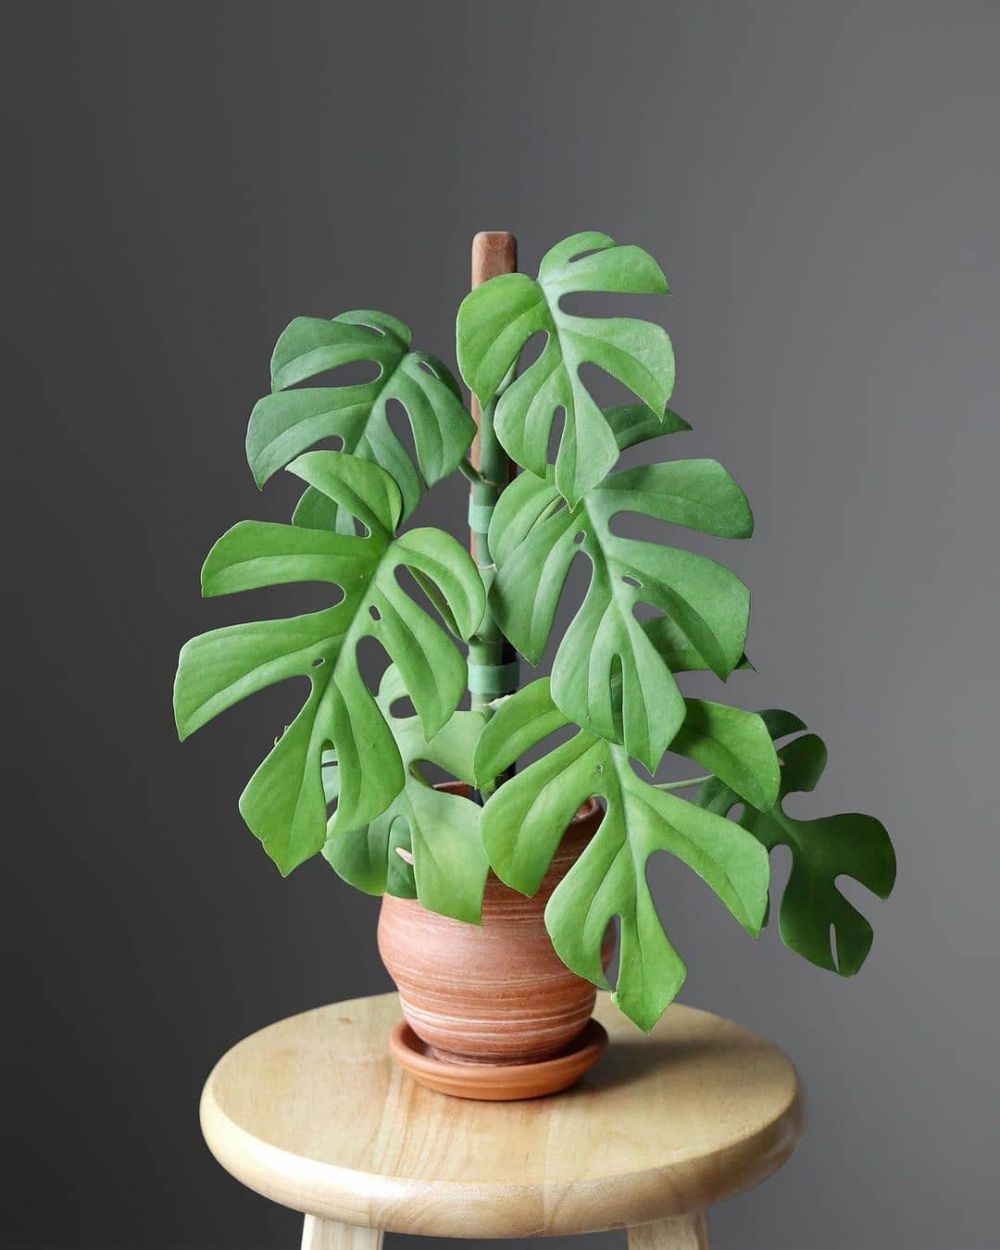 10 Jenis tanaman hias daun bolong, cocok buat indoor dan outdoor